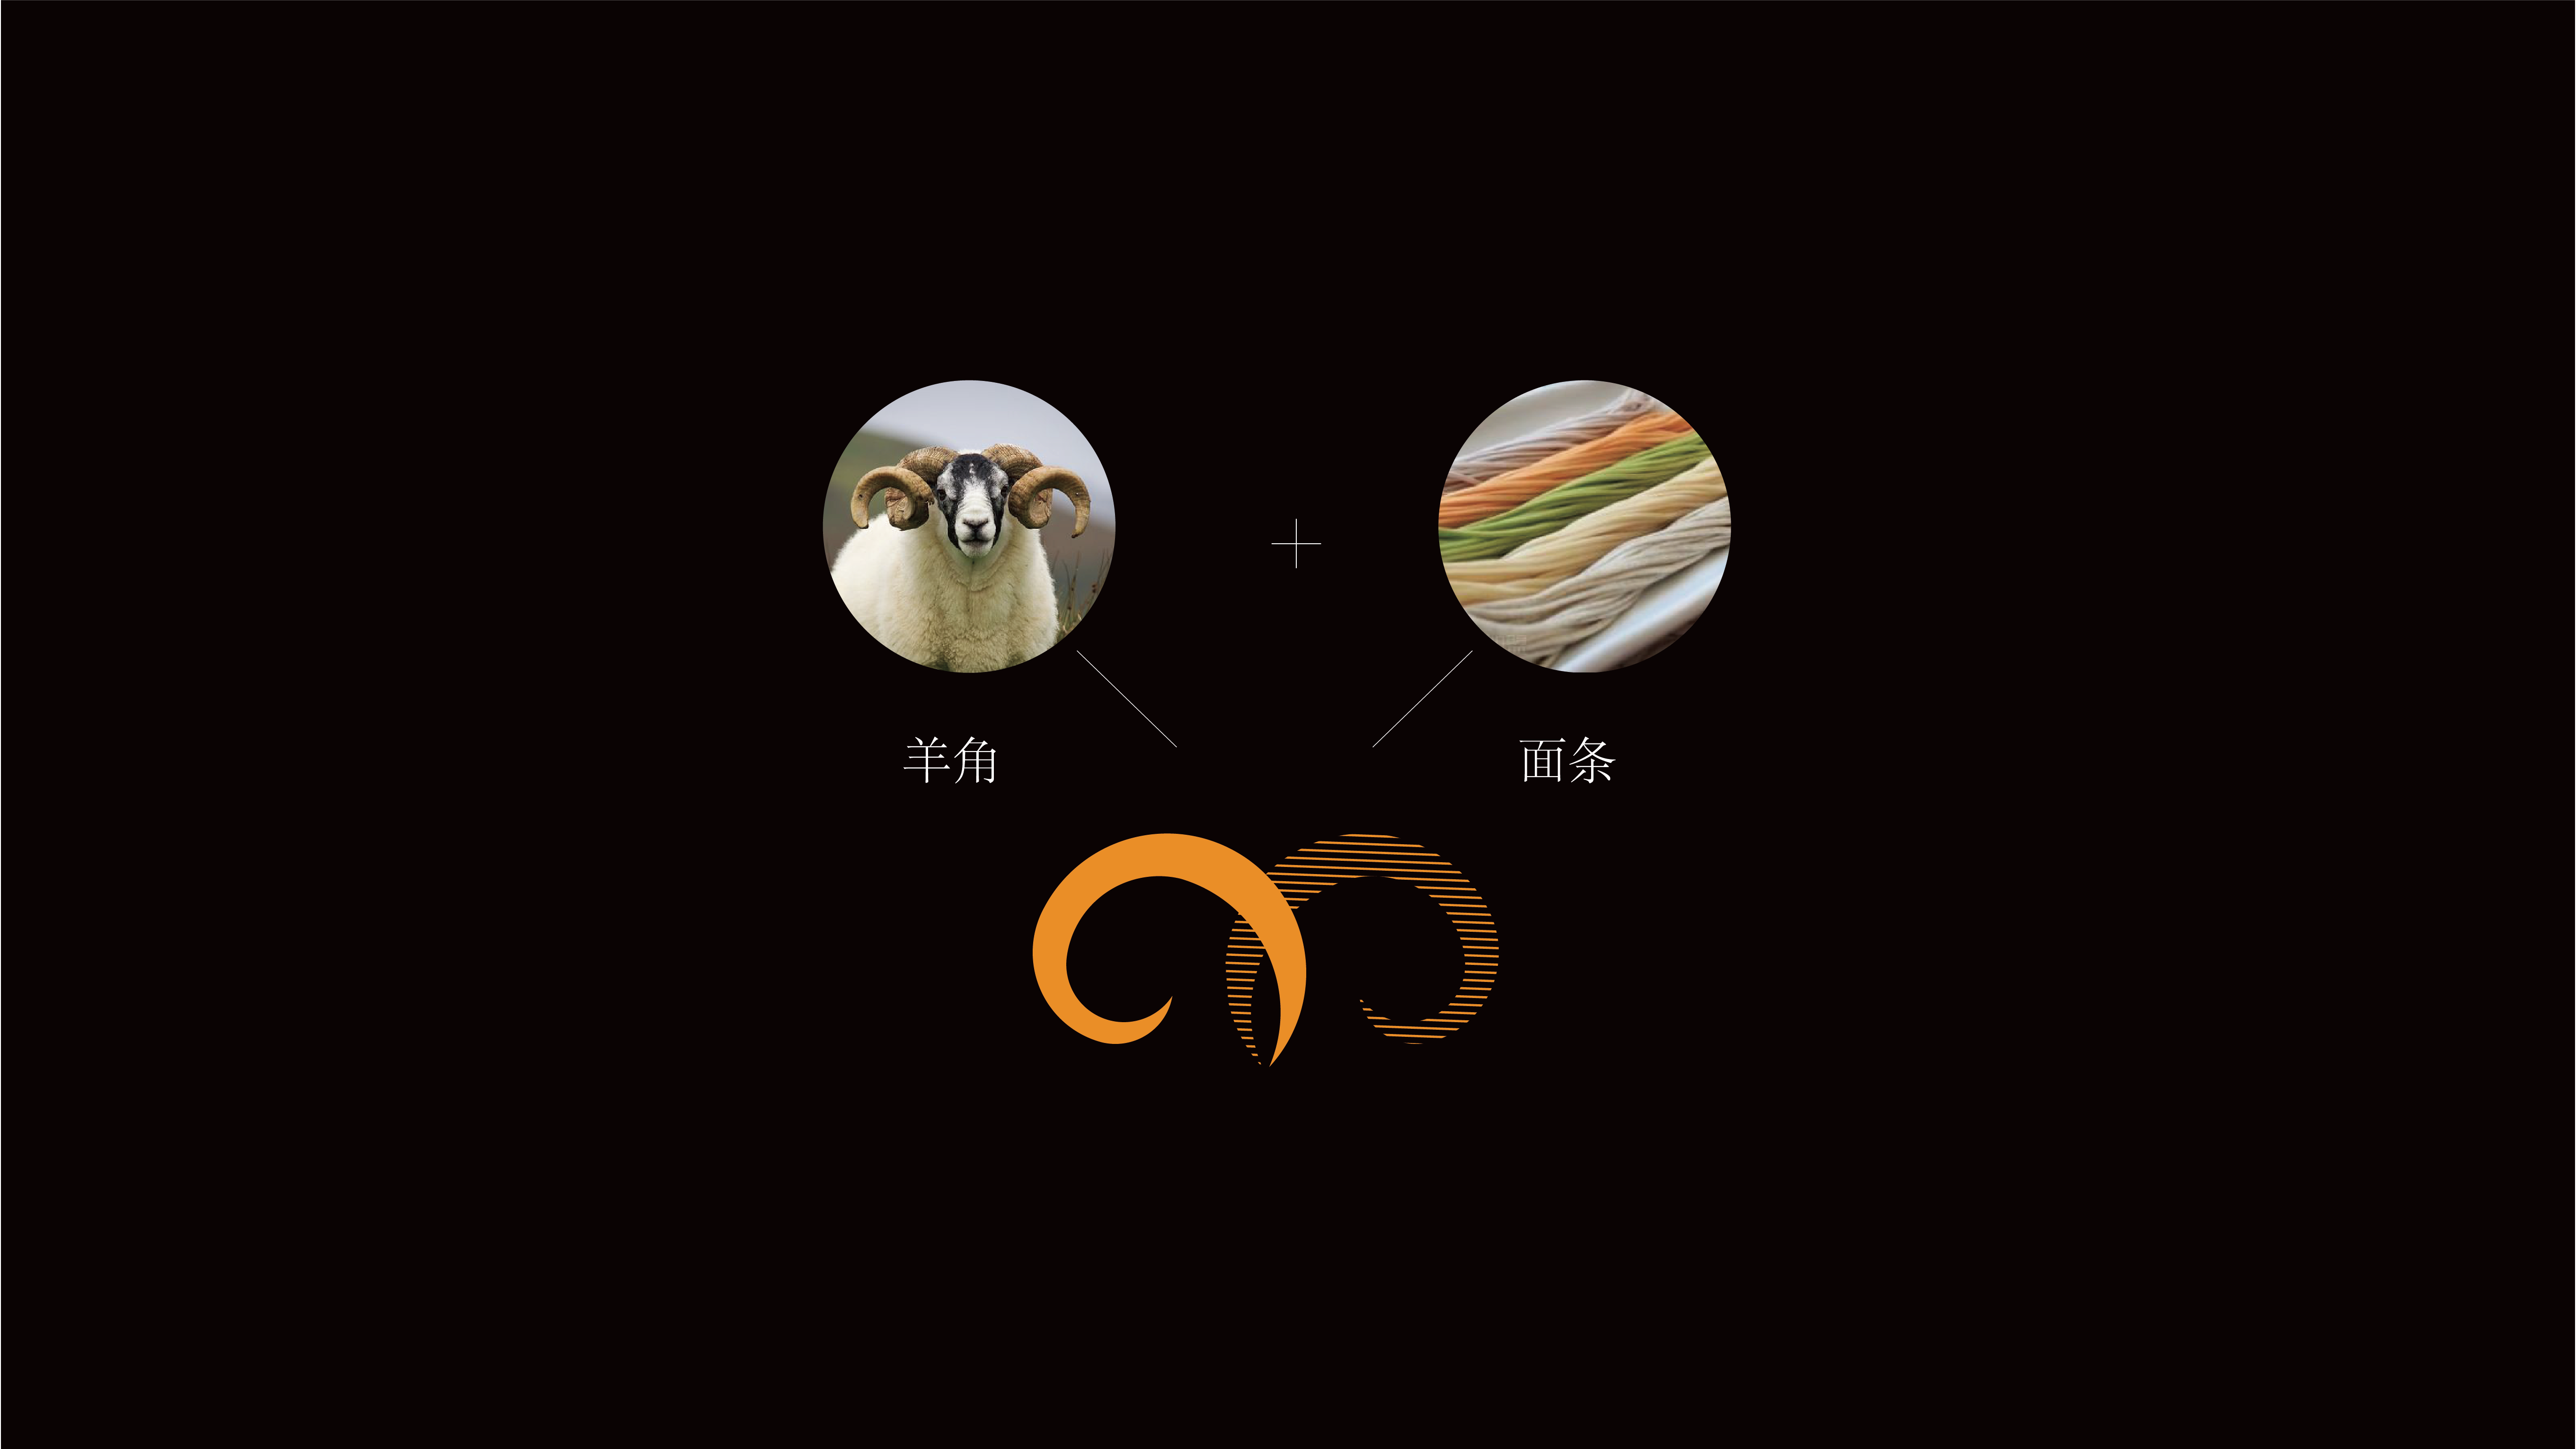 林之羊logo设计